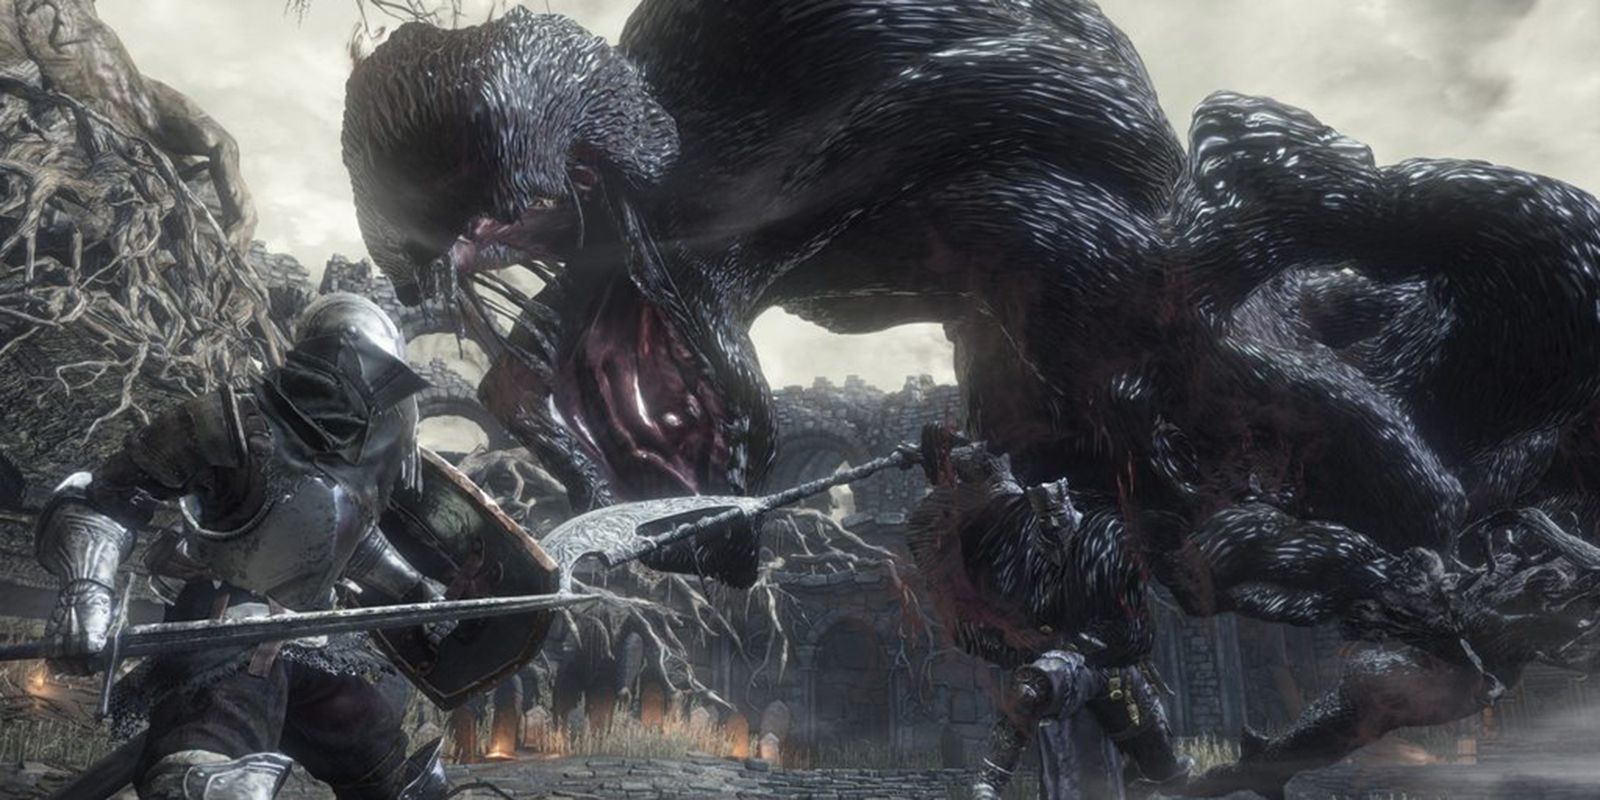 The Dark Souls 3 enemy Iudex Gundyr transforming into a grotesque creature to attack a player.